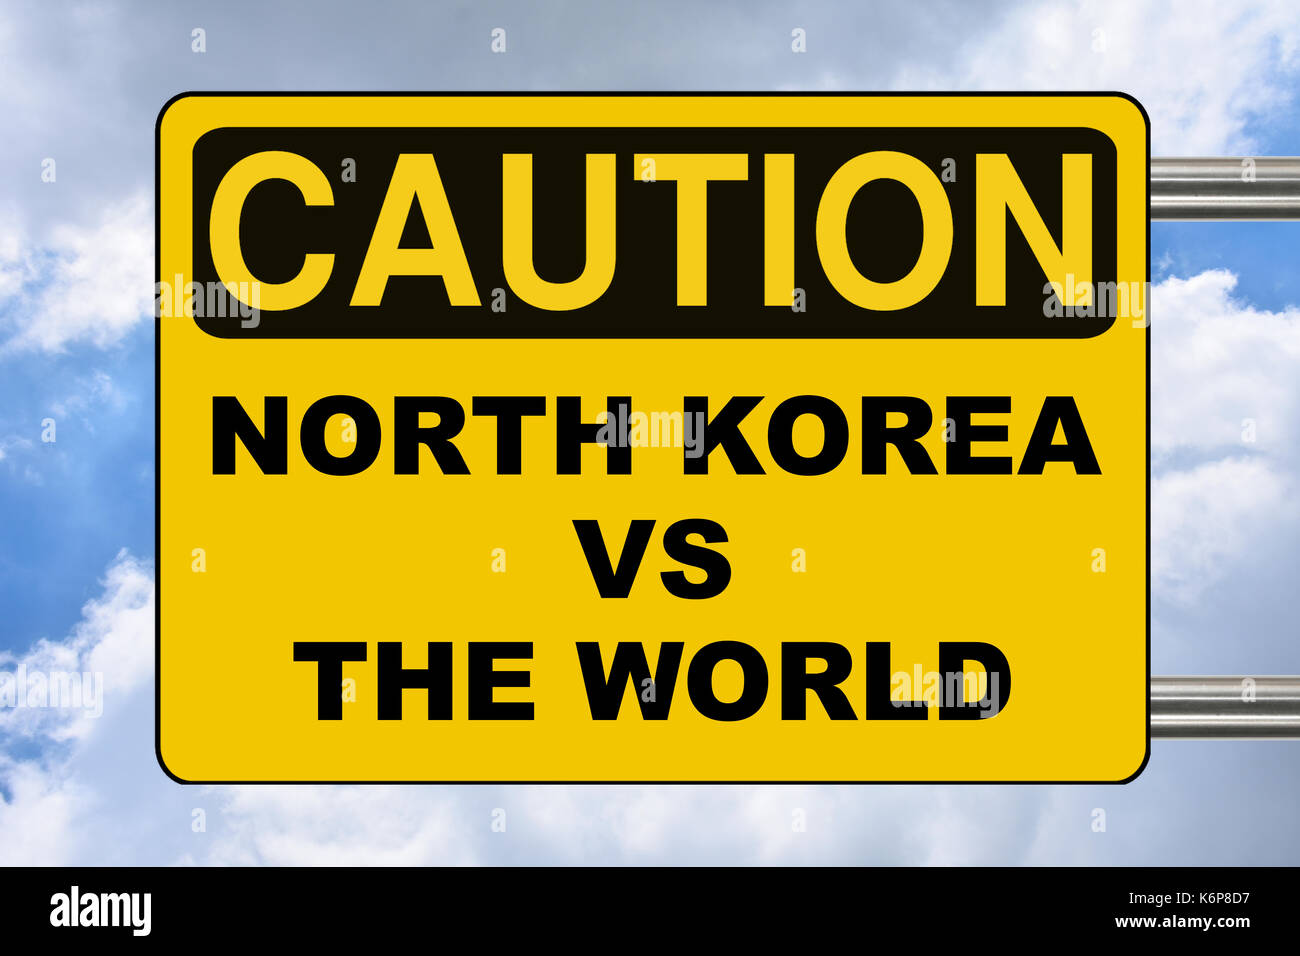 North Korea VS the world, yellow warning road sign Stock Photo